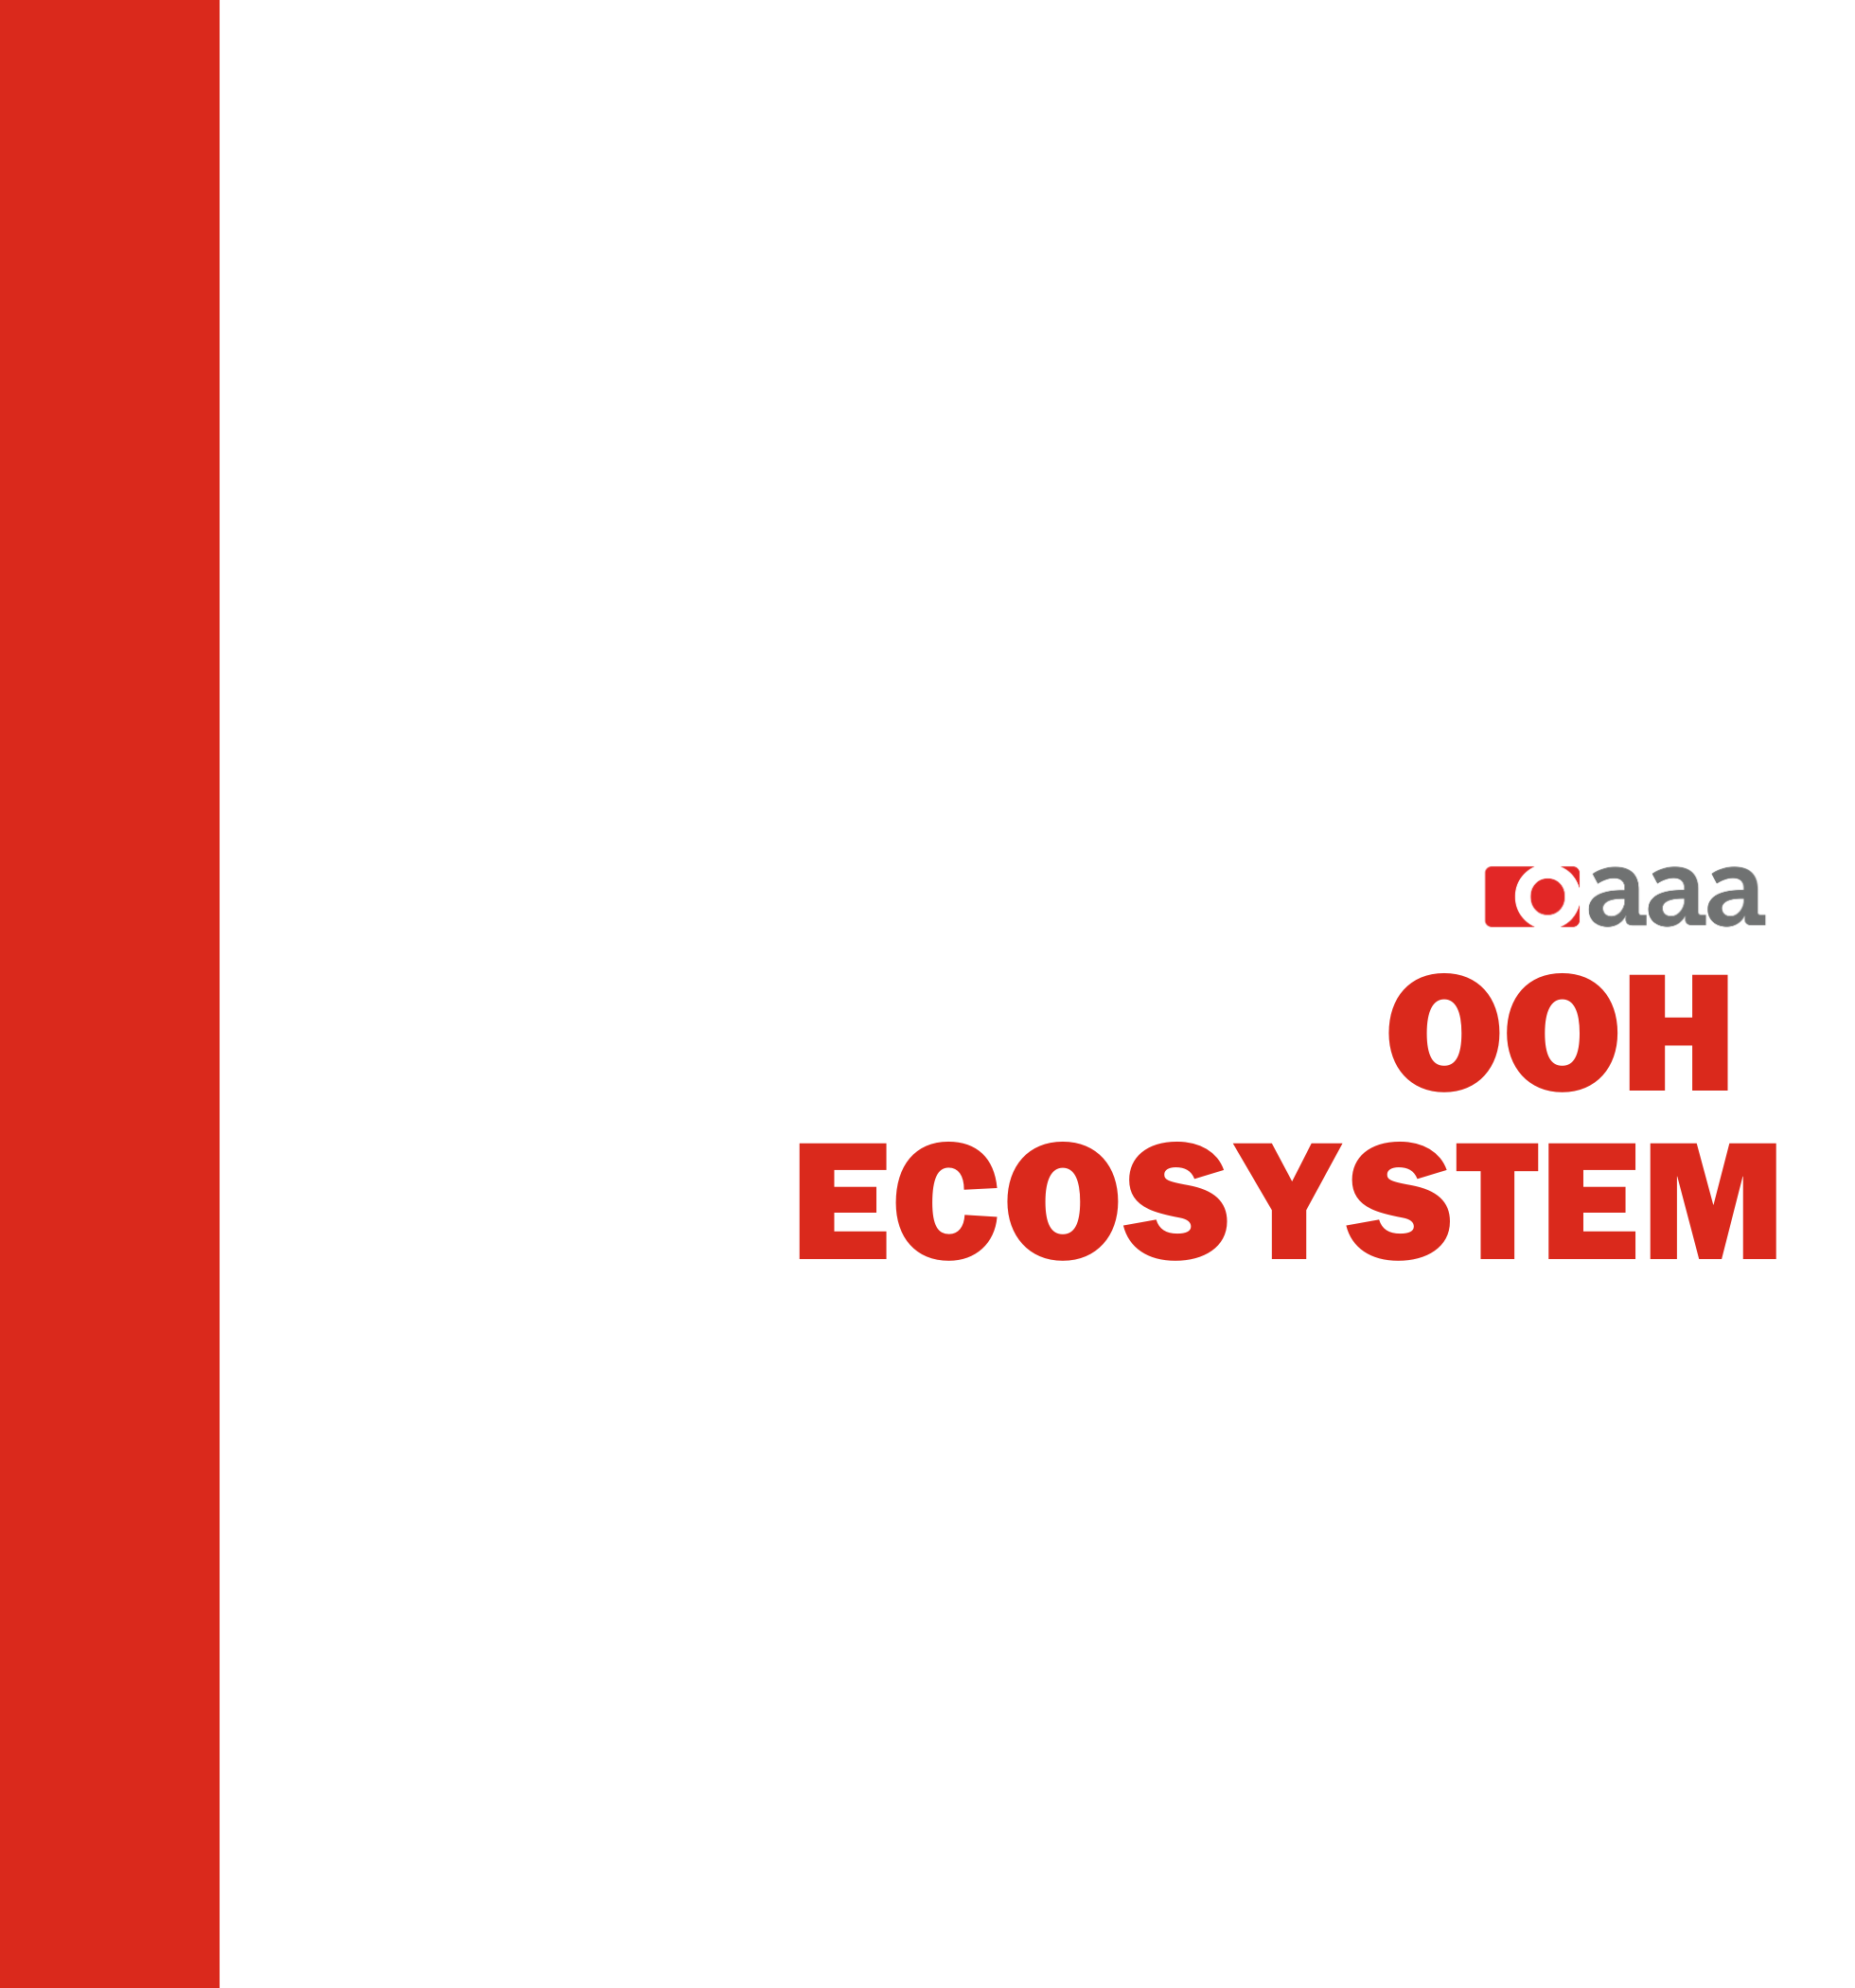 OOH Ecosystem